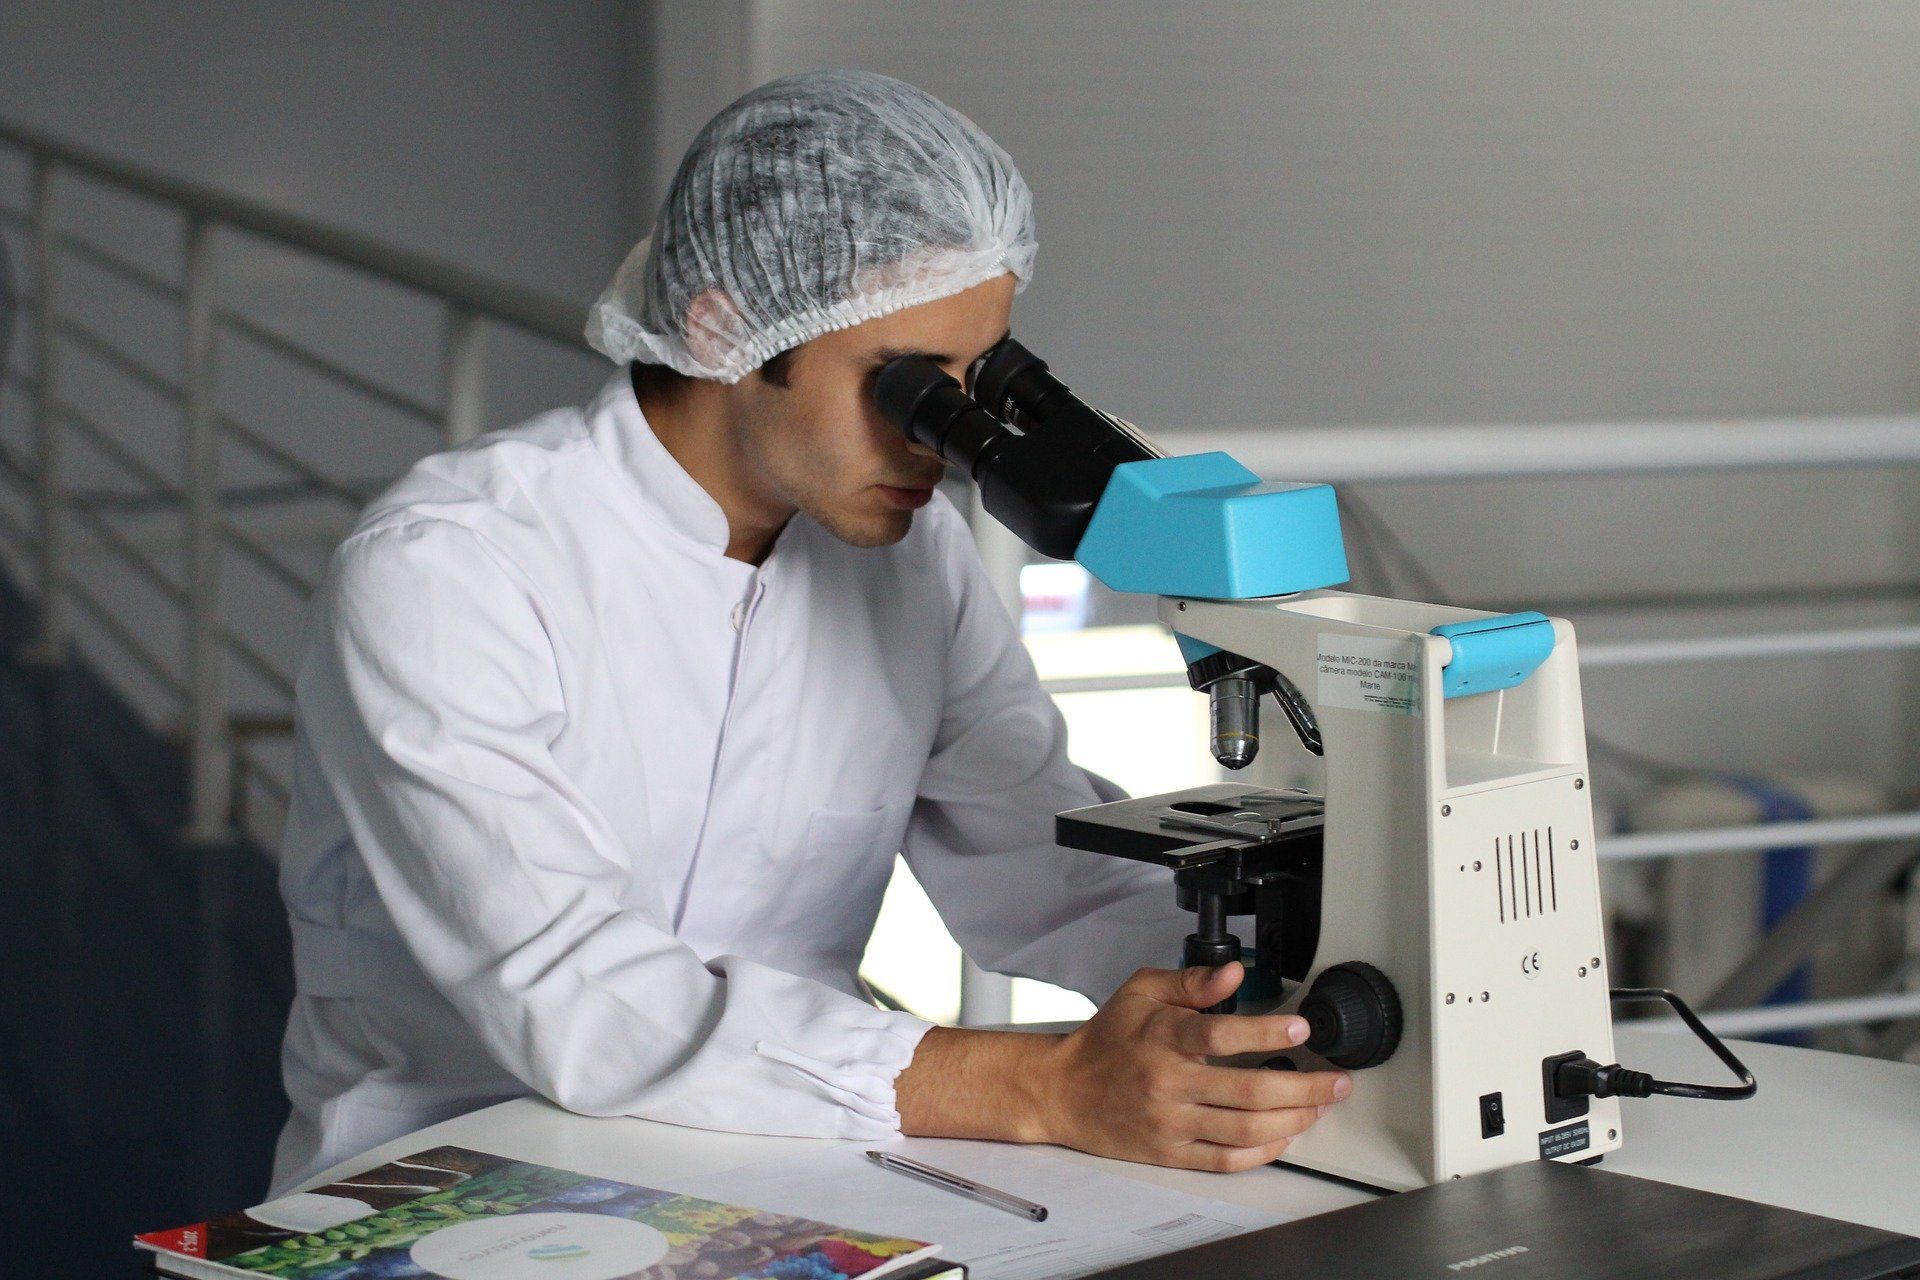 investigador mirando a través de un microscopio